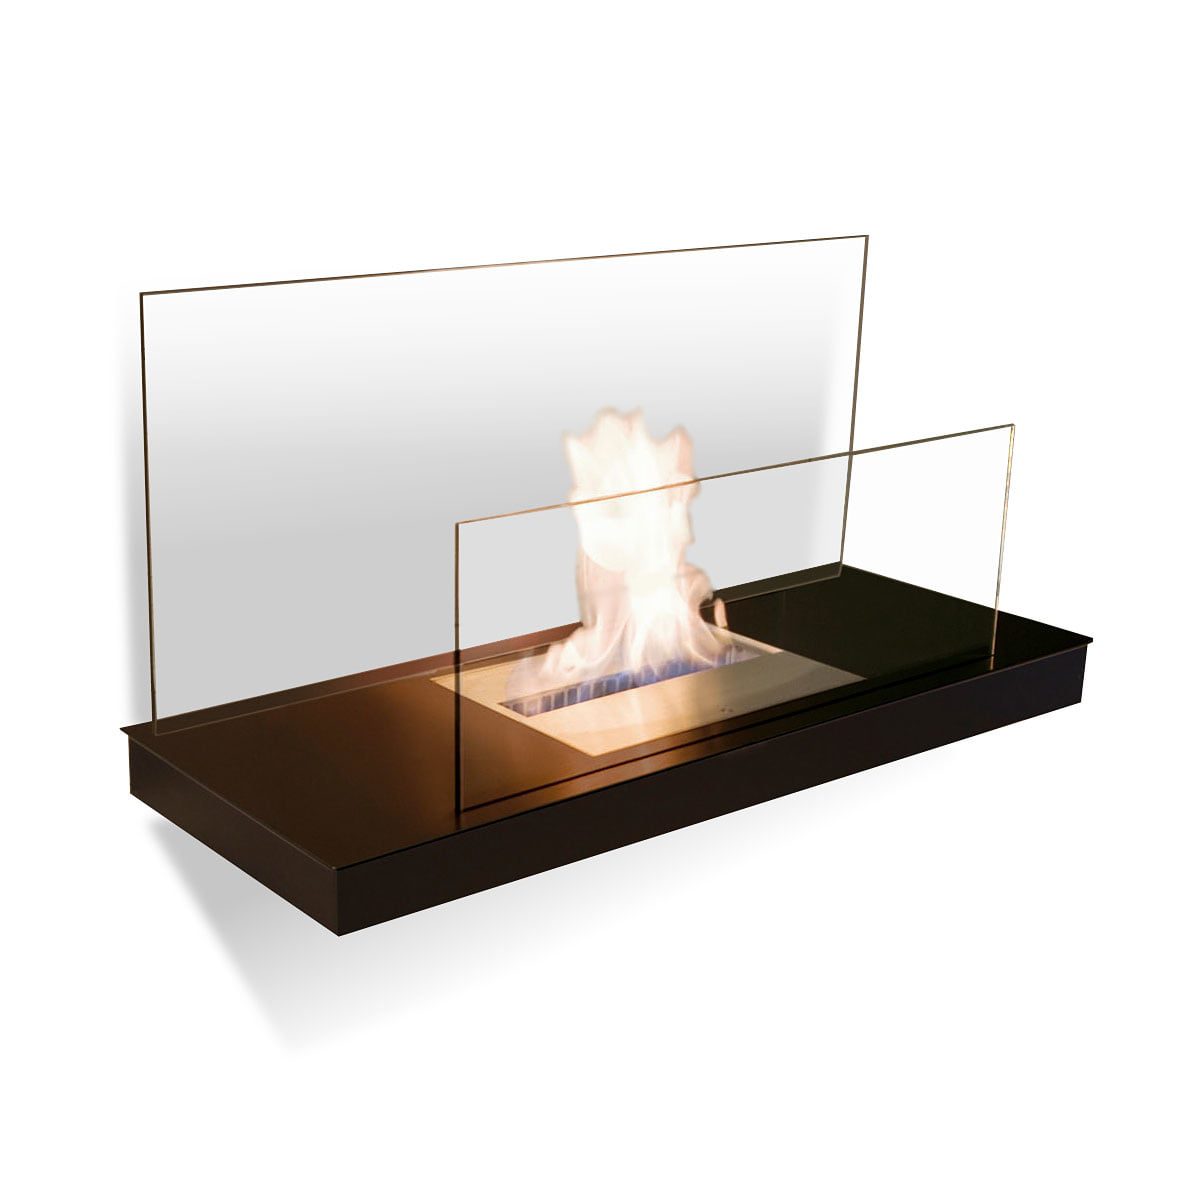 Radius Wall Flame 2 | Ottevangers Lichtdesign